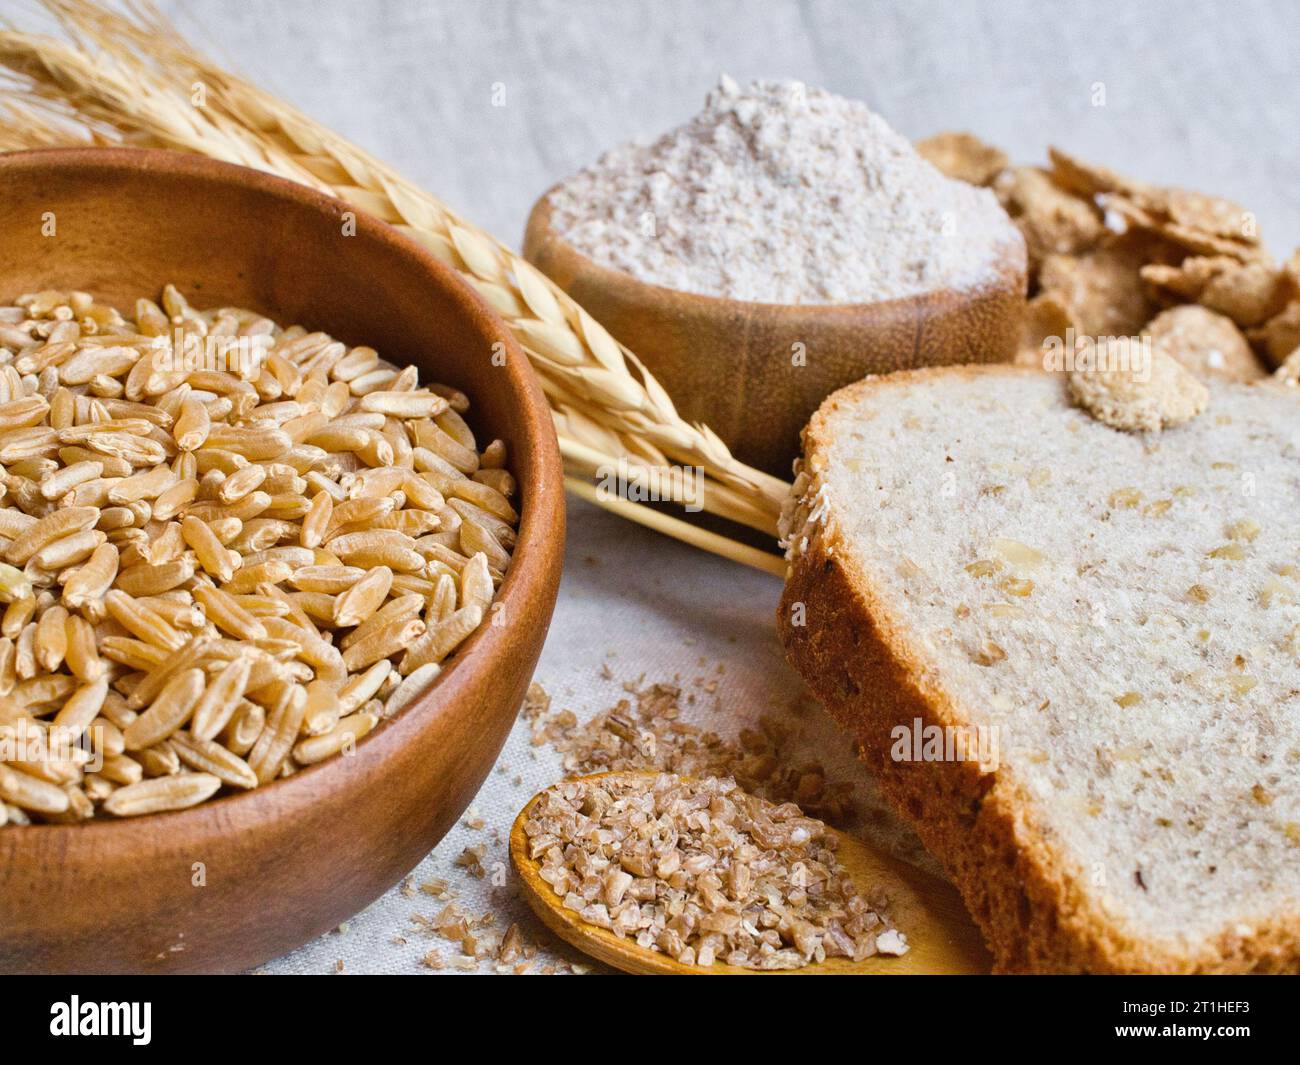 Still life of wheat, whole grain wheat, bulgur wheat, whole wheat flour, and whole wheat bread, with wheat ear on linen table cloth. Stock Photo